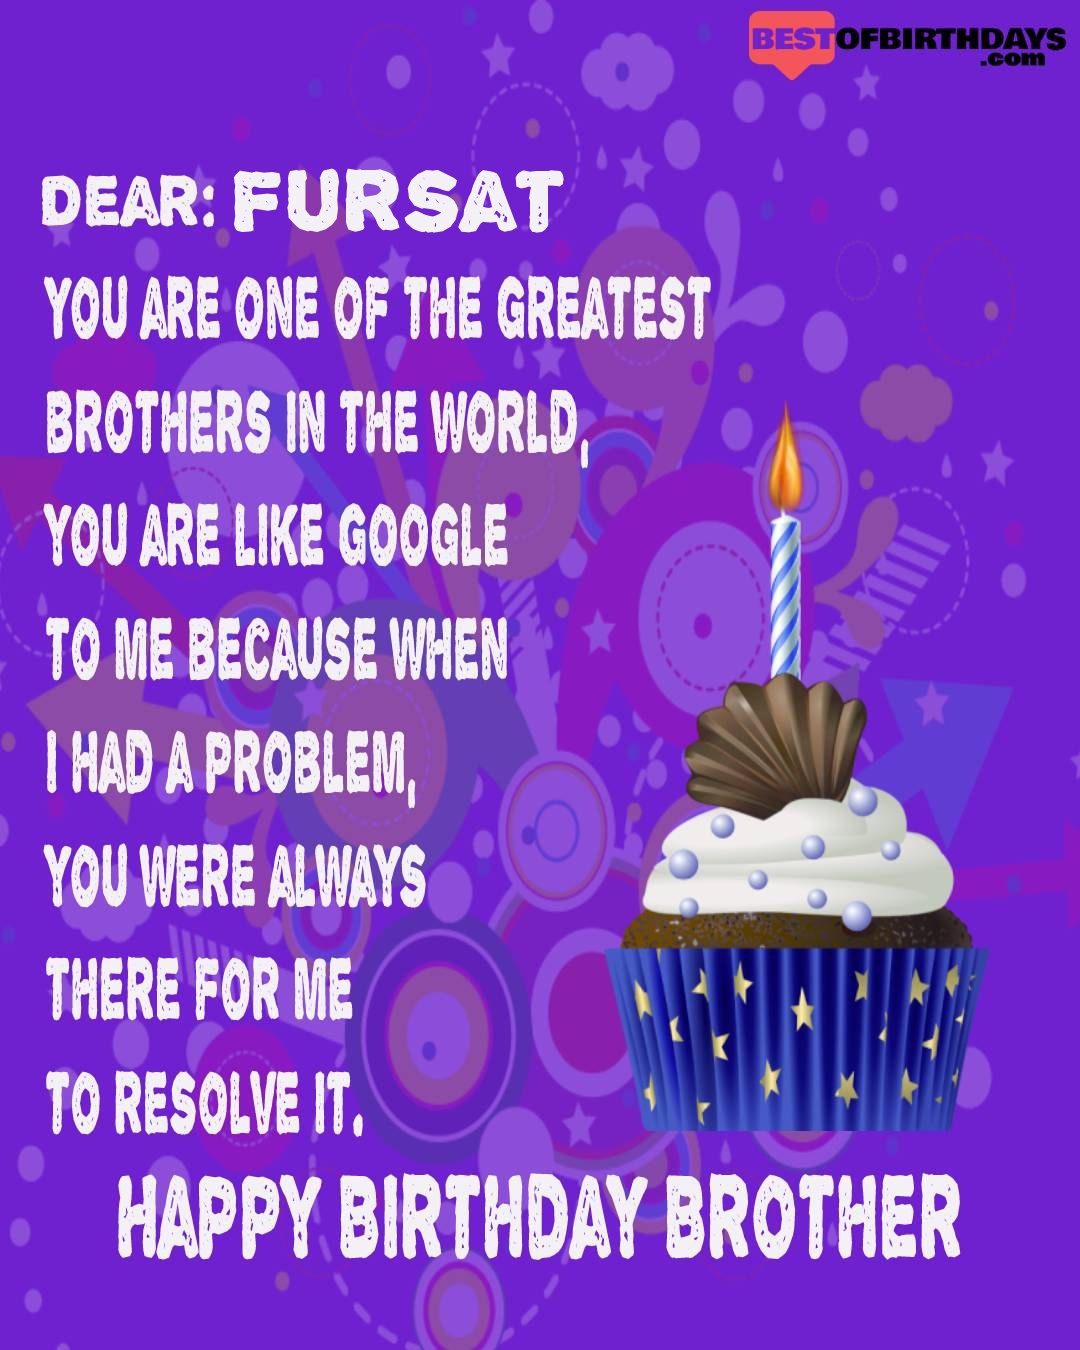 Happy birthday fursat bhai brother bro